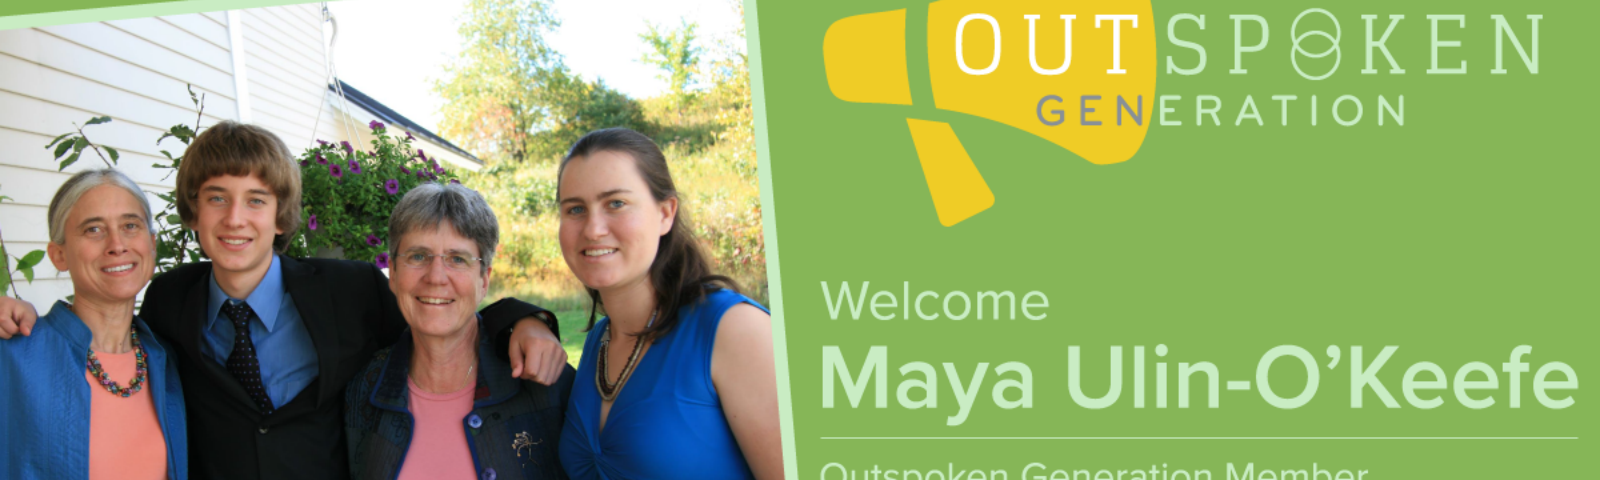 Outspoken Generation Welcomes Maya Ulin-O'Keefe